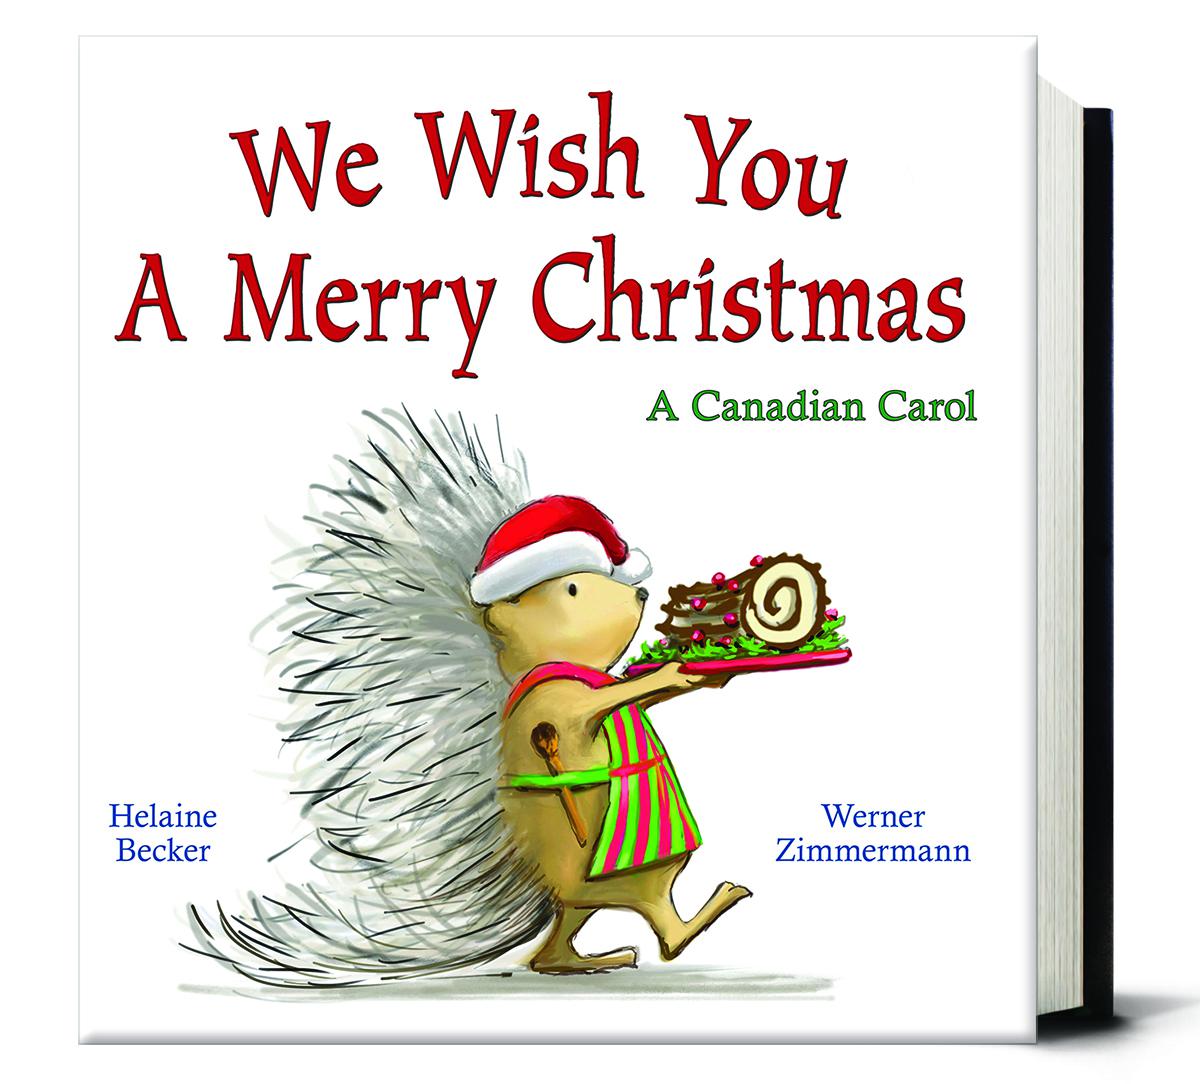  We Wish You a Merry Christmas: A Canadian Carol 